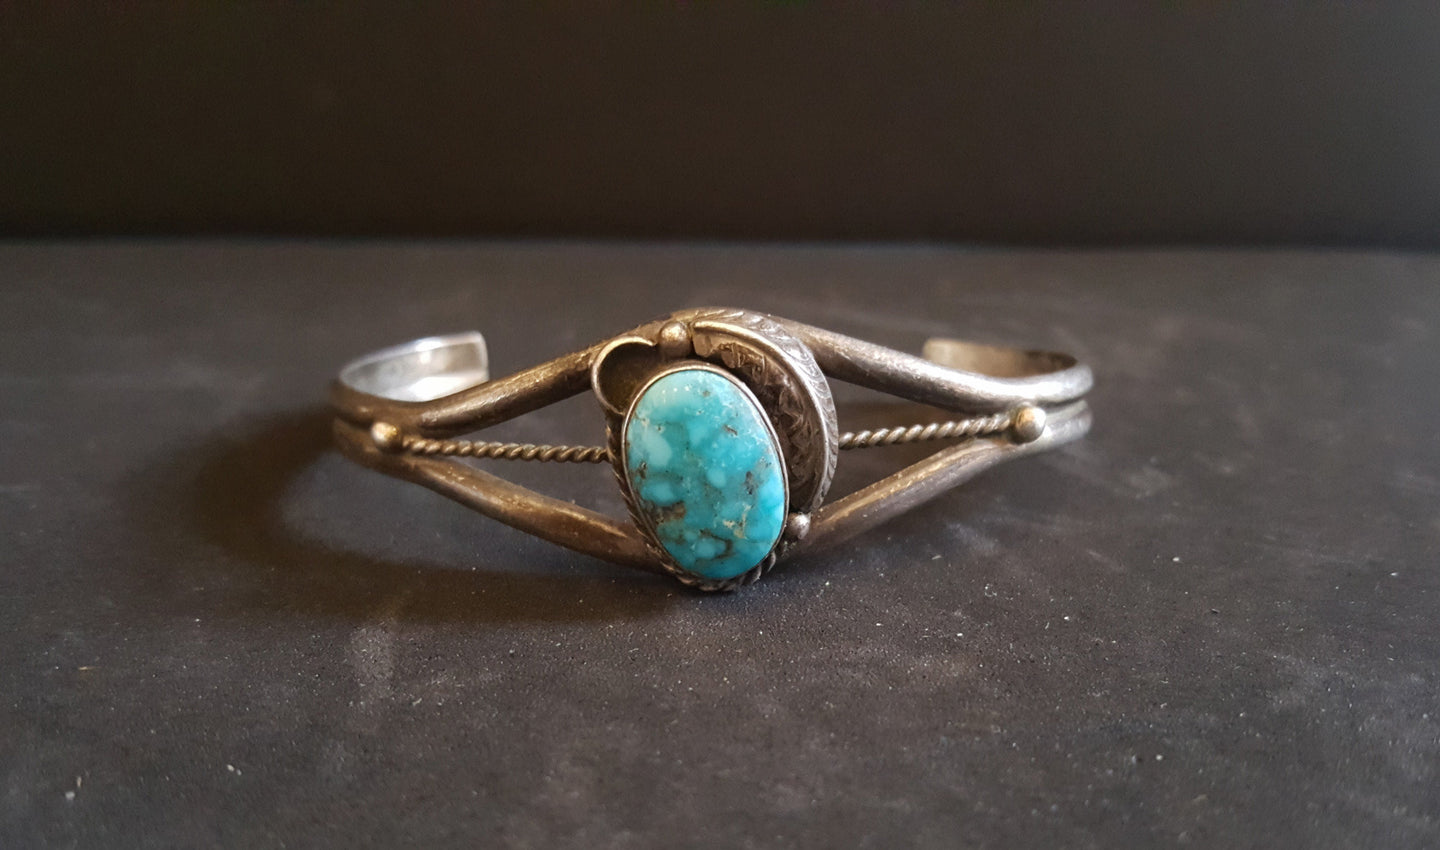 Navajo Leaf Royston turquoise sterling silver cuff bracelet - vintage